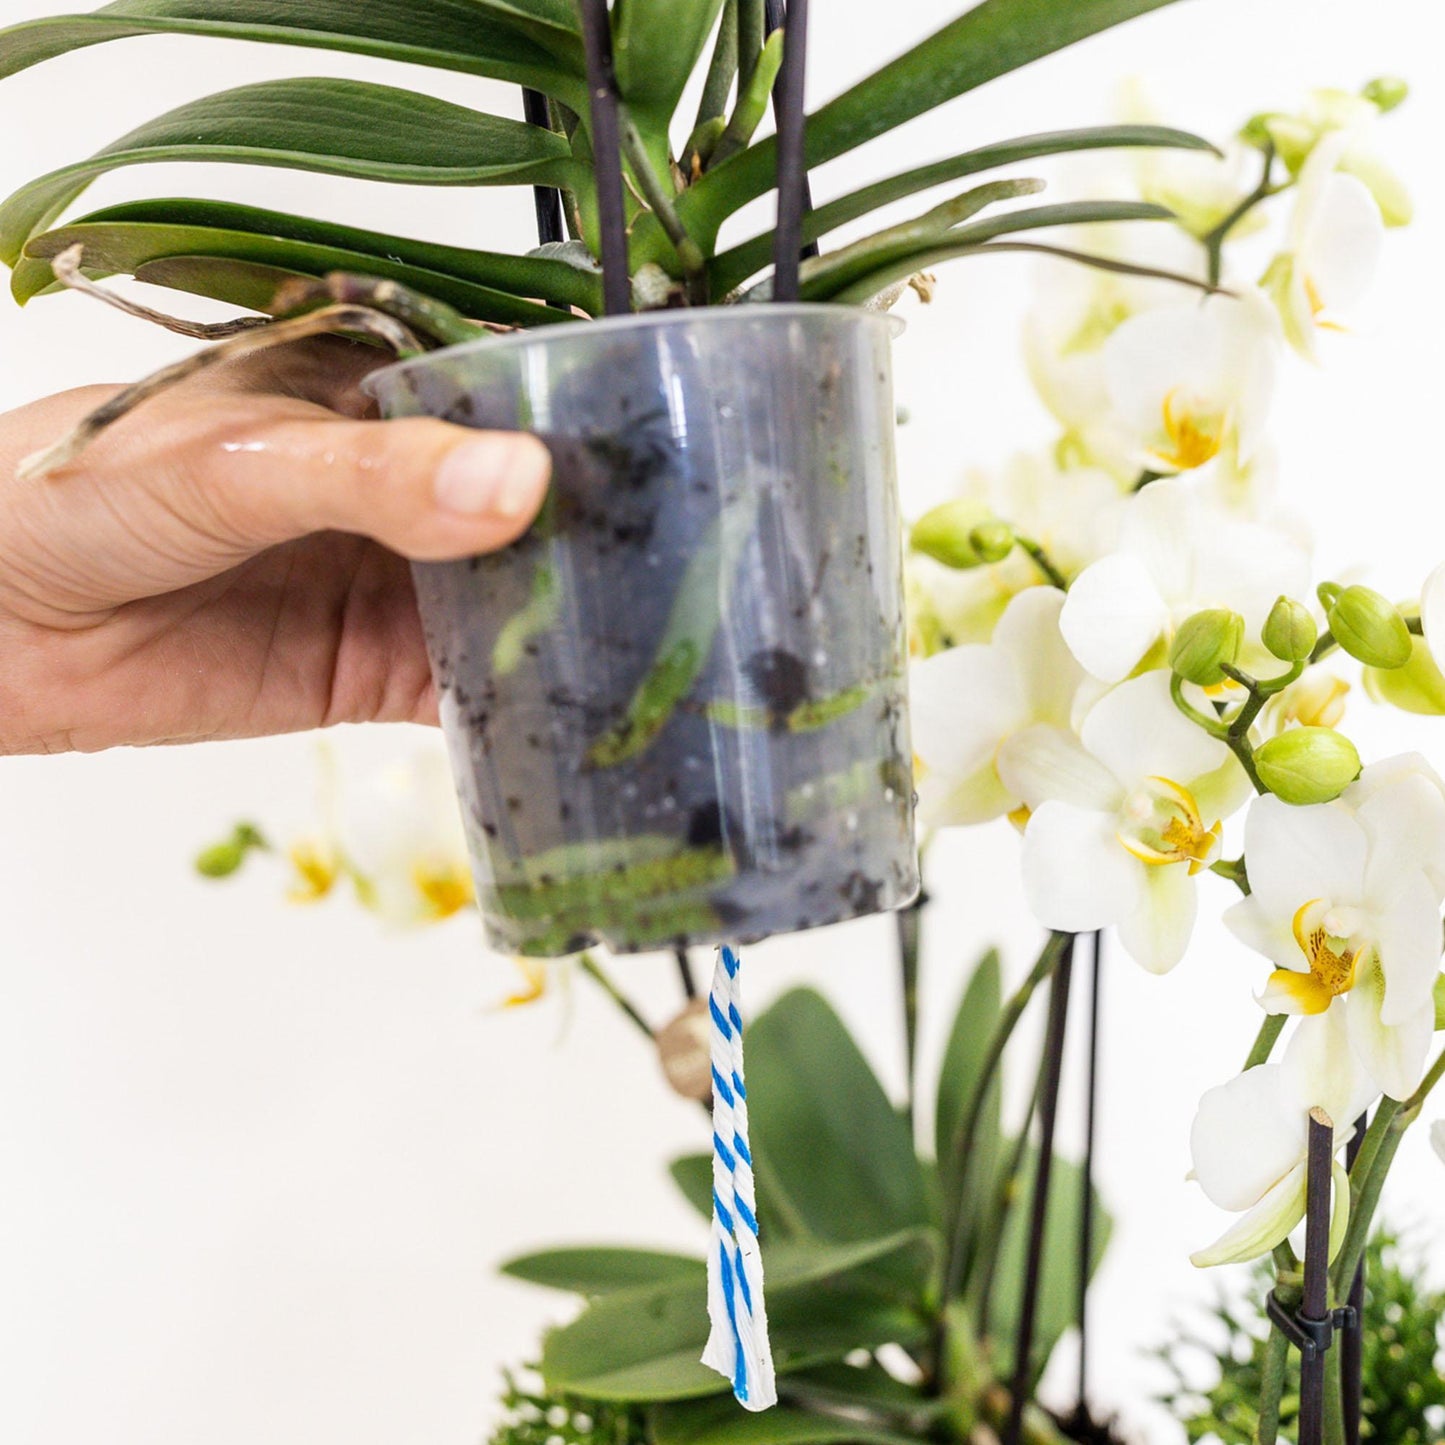 Kolibri Orchids | witte plantenset in Cotton Basket incl. waterreservoir | drie witte orchideeën Lausanne 9cm en drie groene planten Rhipsalis | Jungle Bouquet wit met zelfvoorzienend waterreservoir